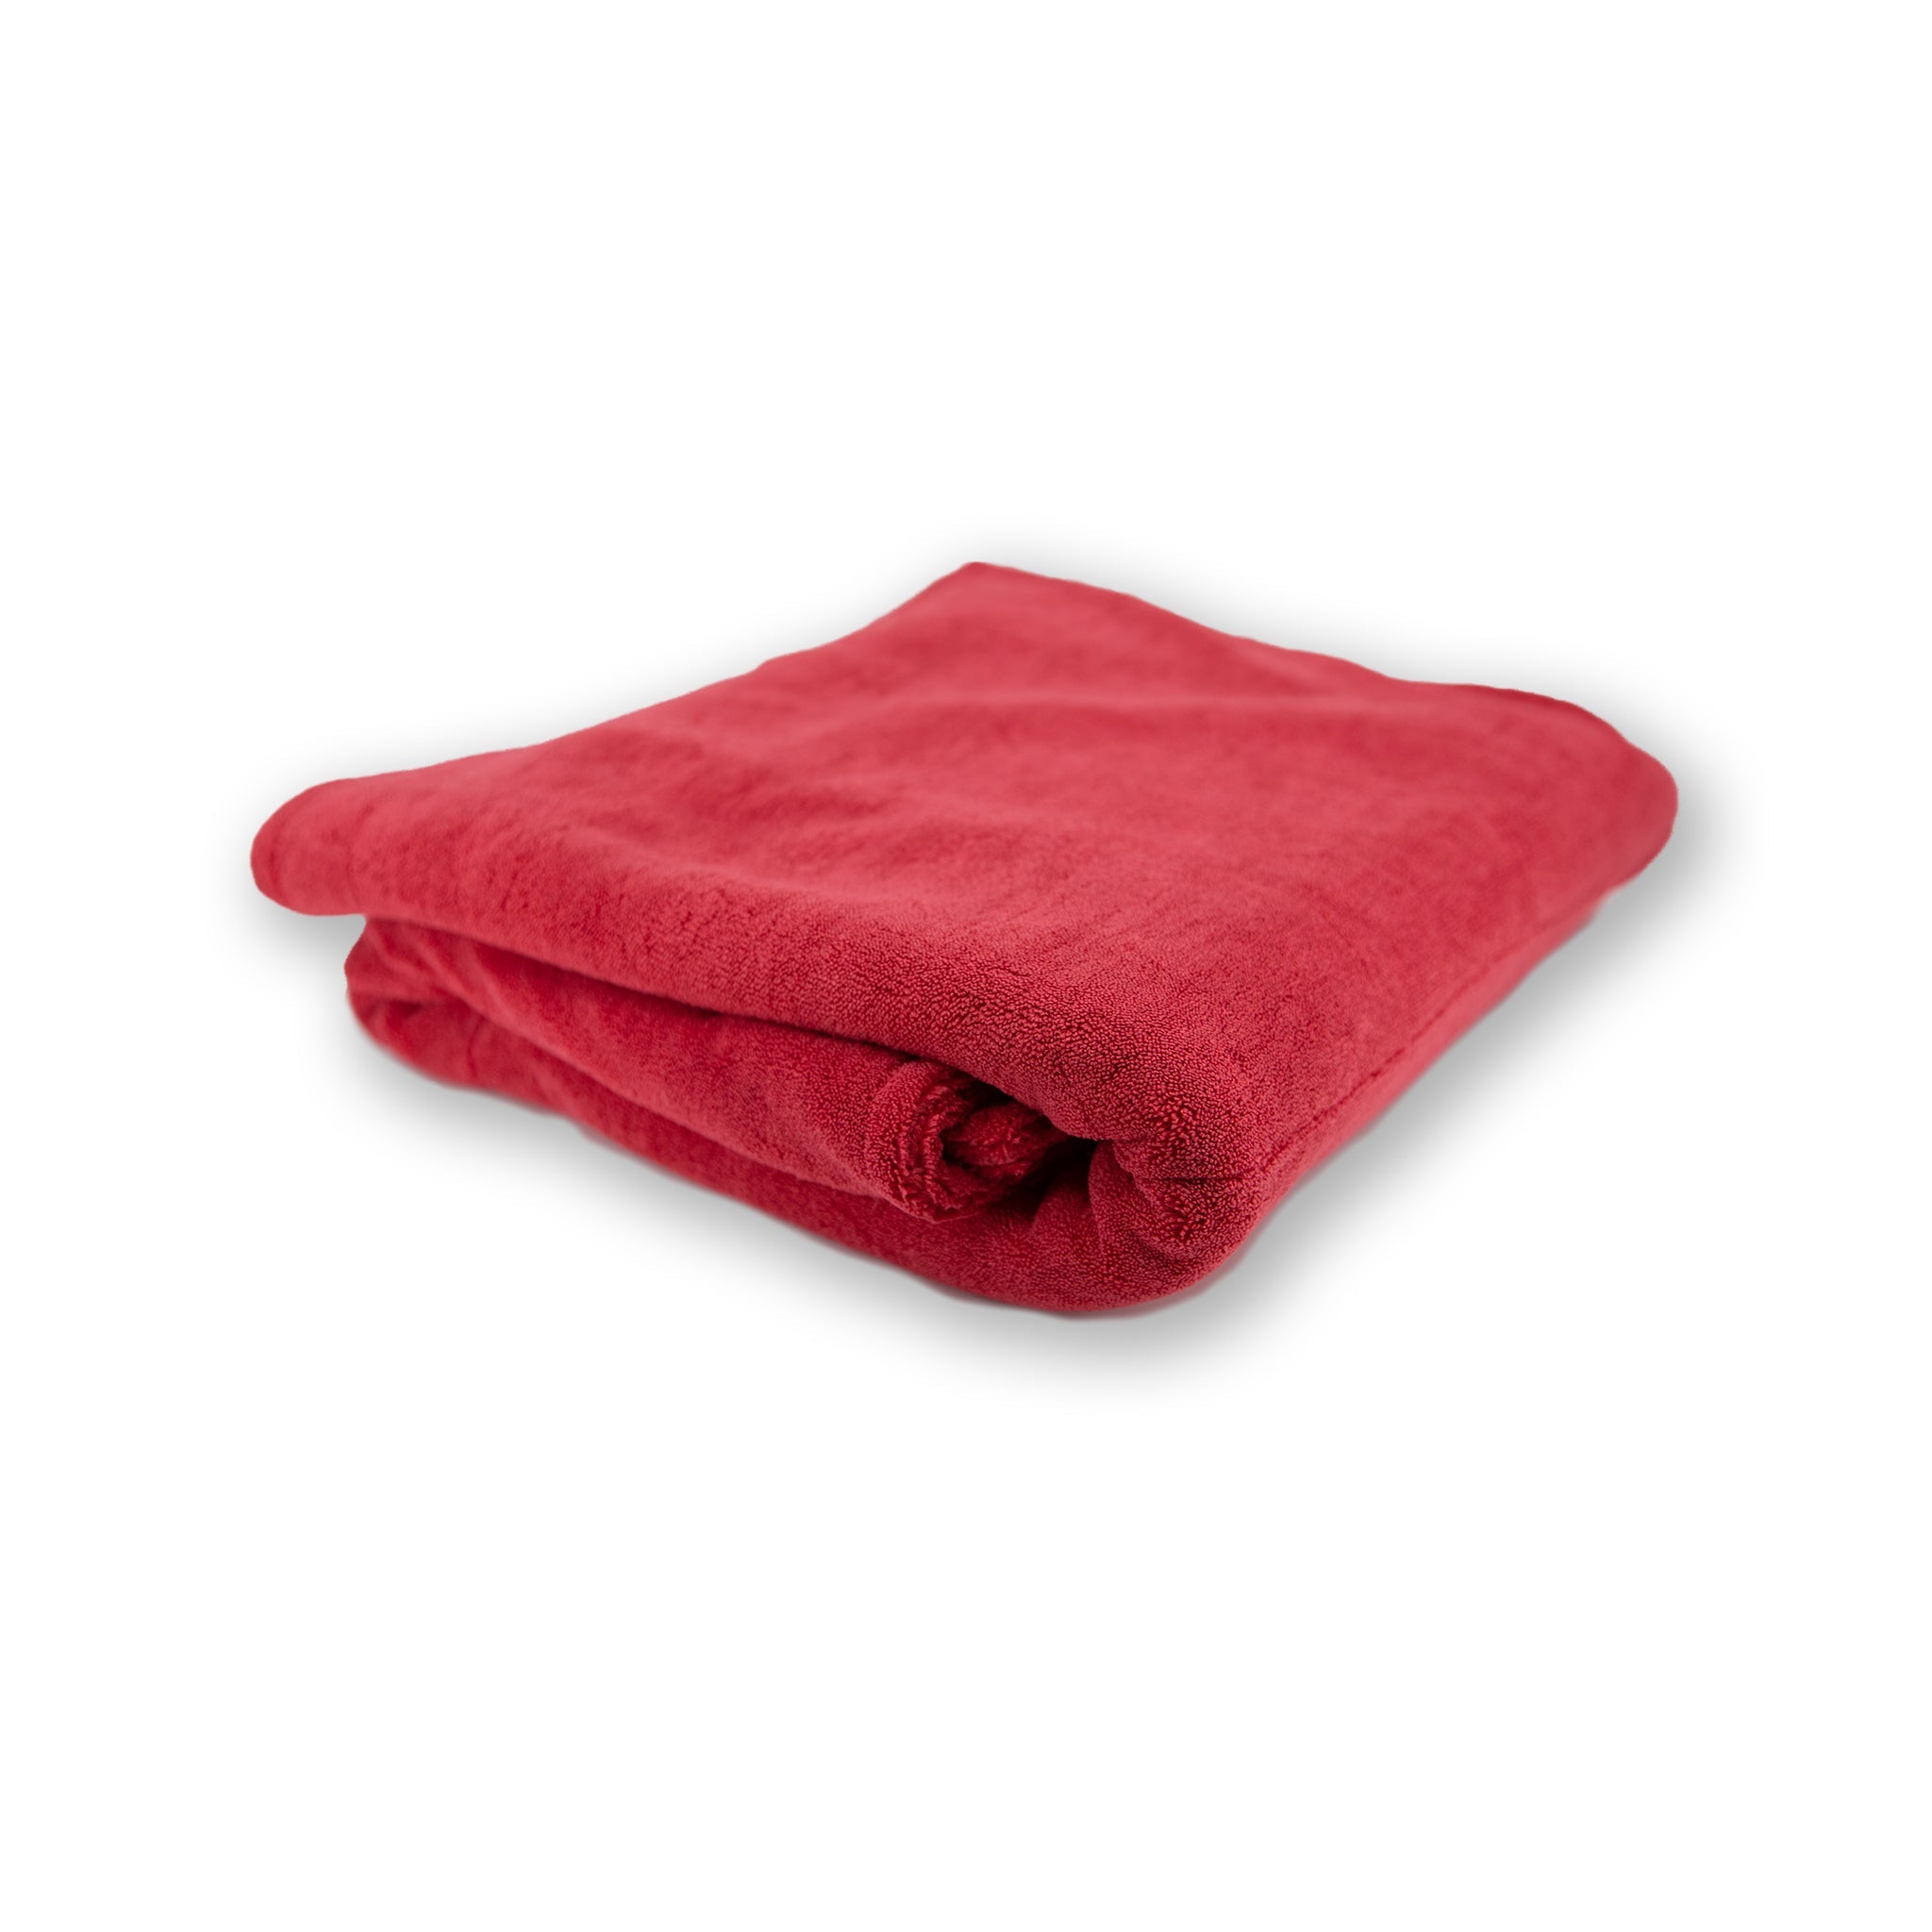 KLIN Drying Duo Evo Towel | Large 31 x 30 | Red